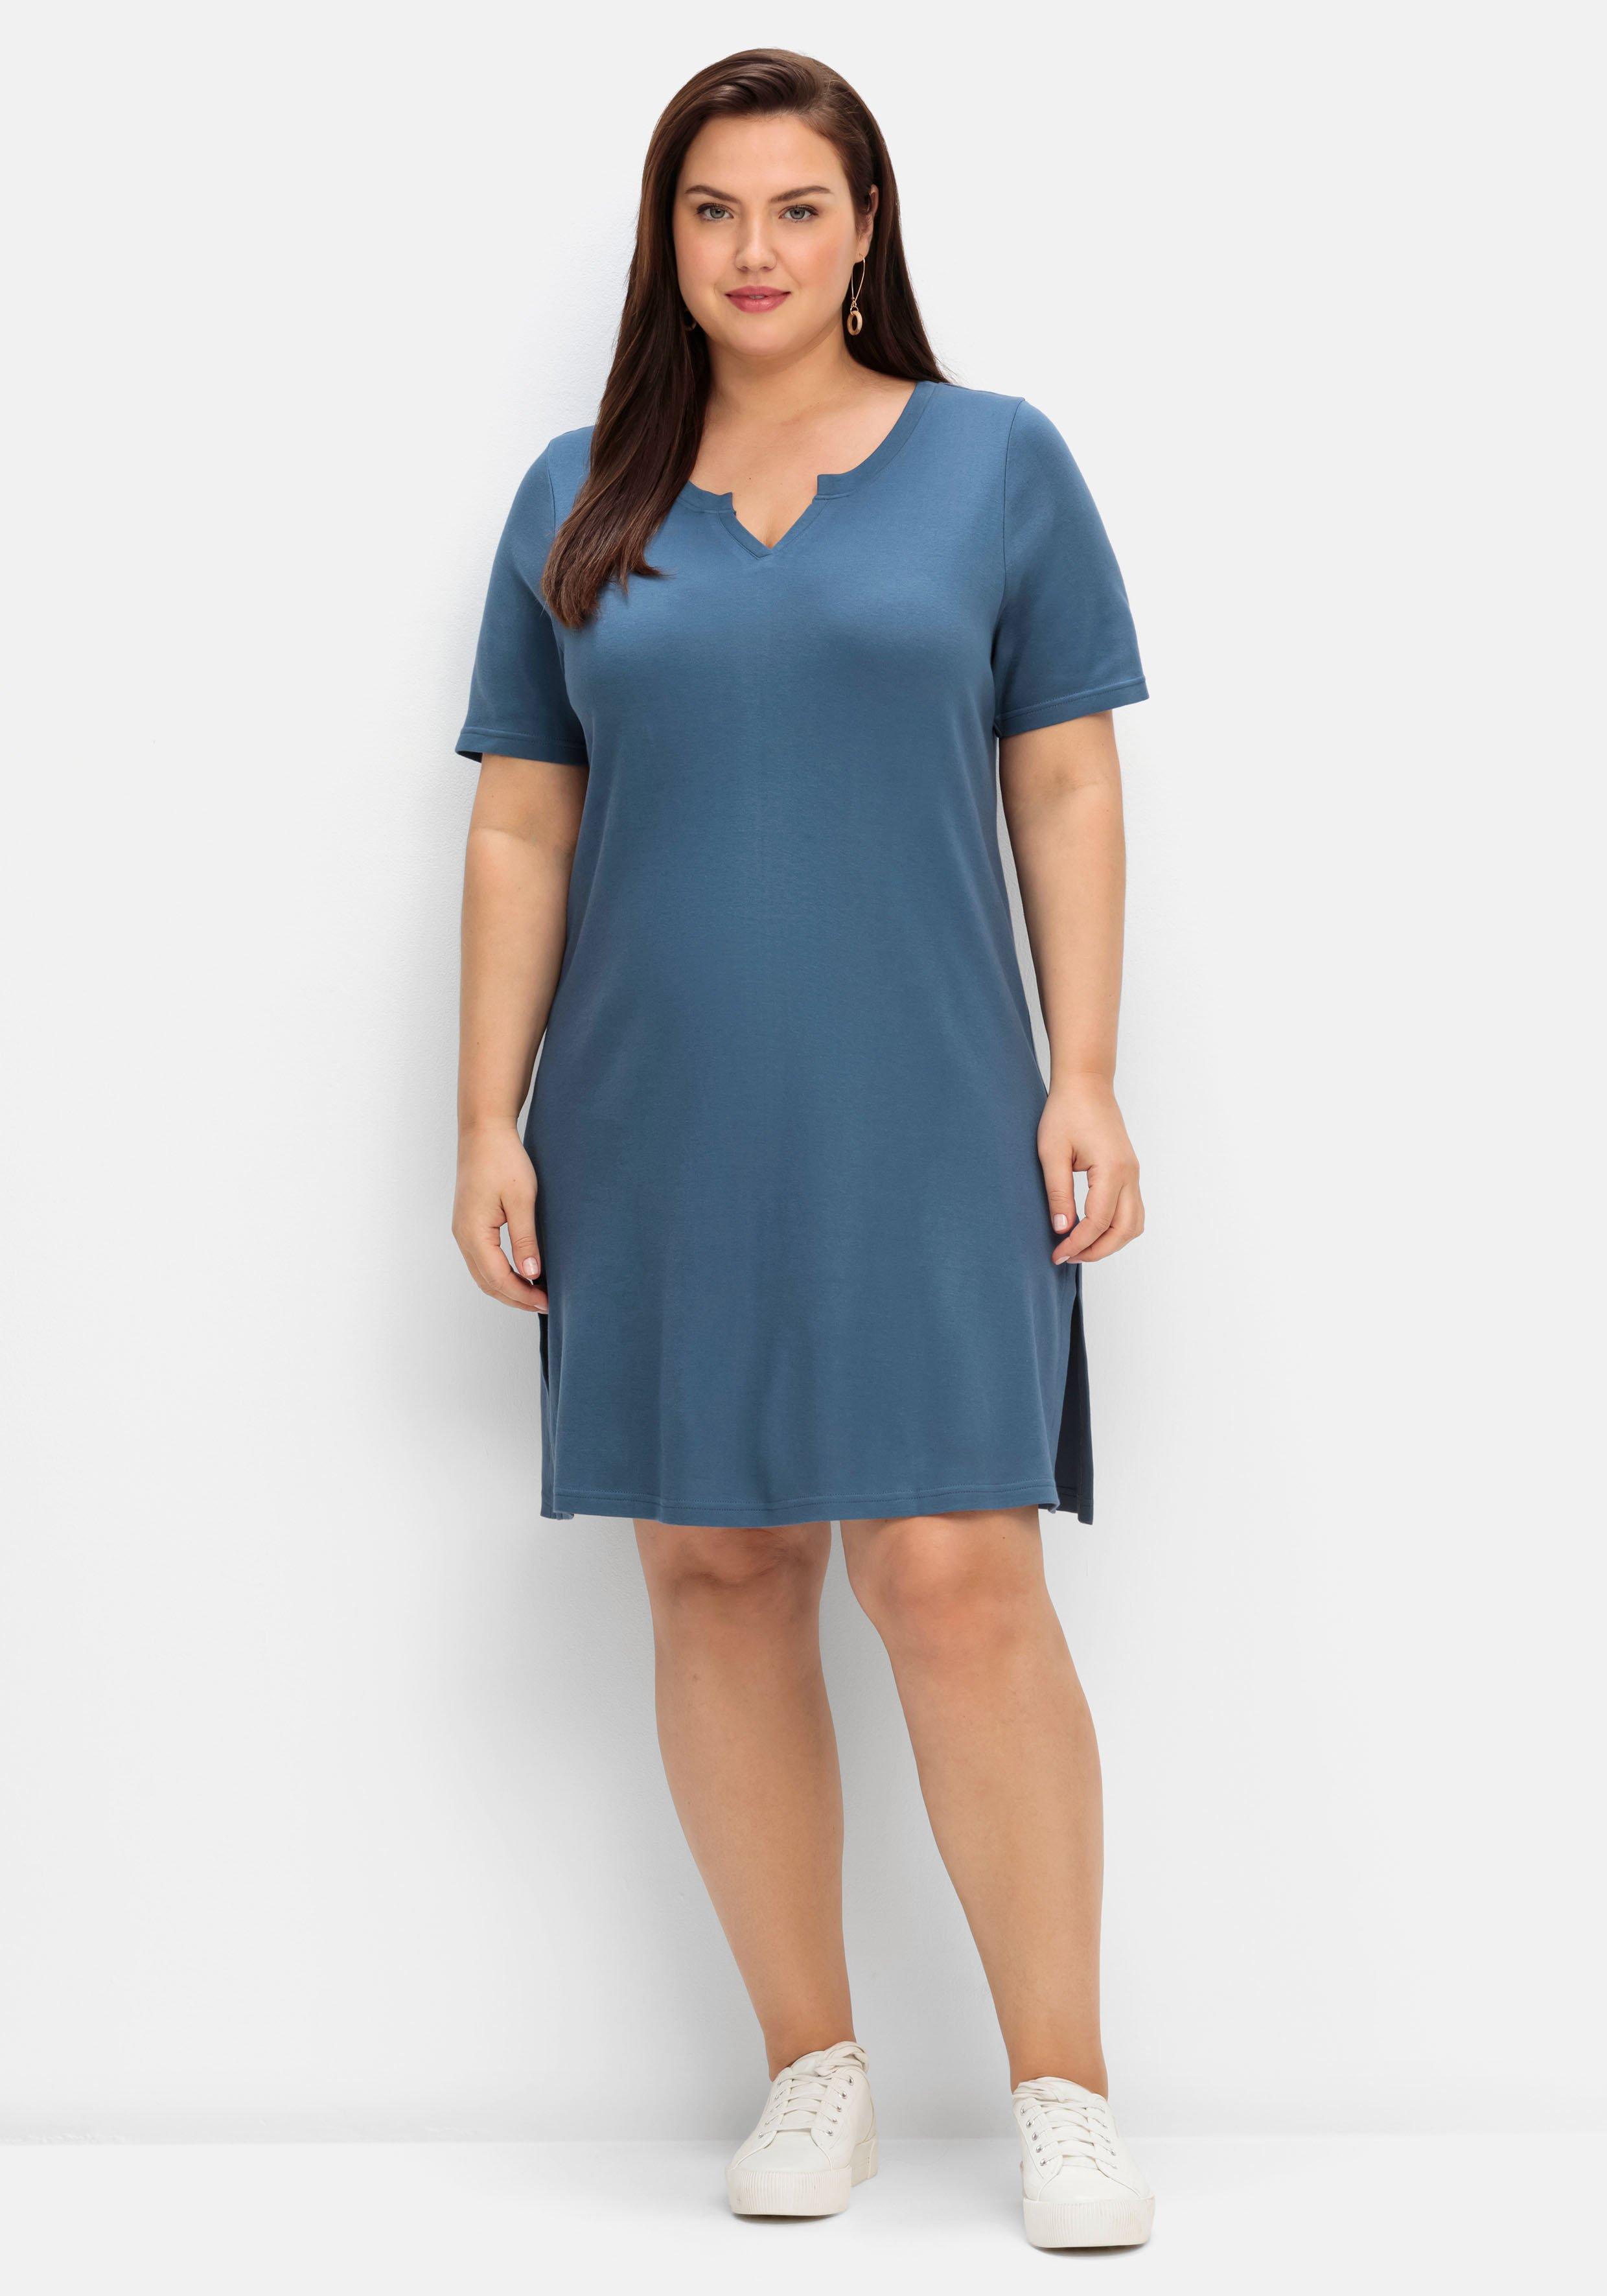 Shirtkleider große Größen blau kurz Mode | Size Plus sheego ♥